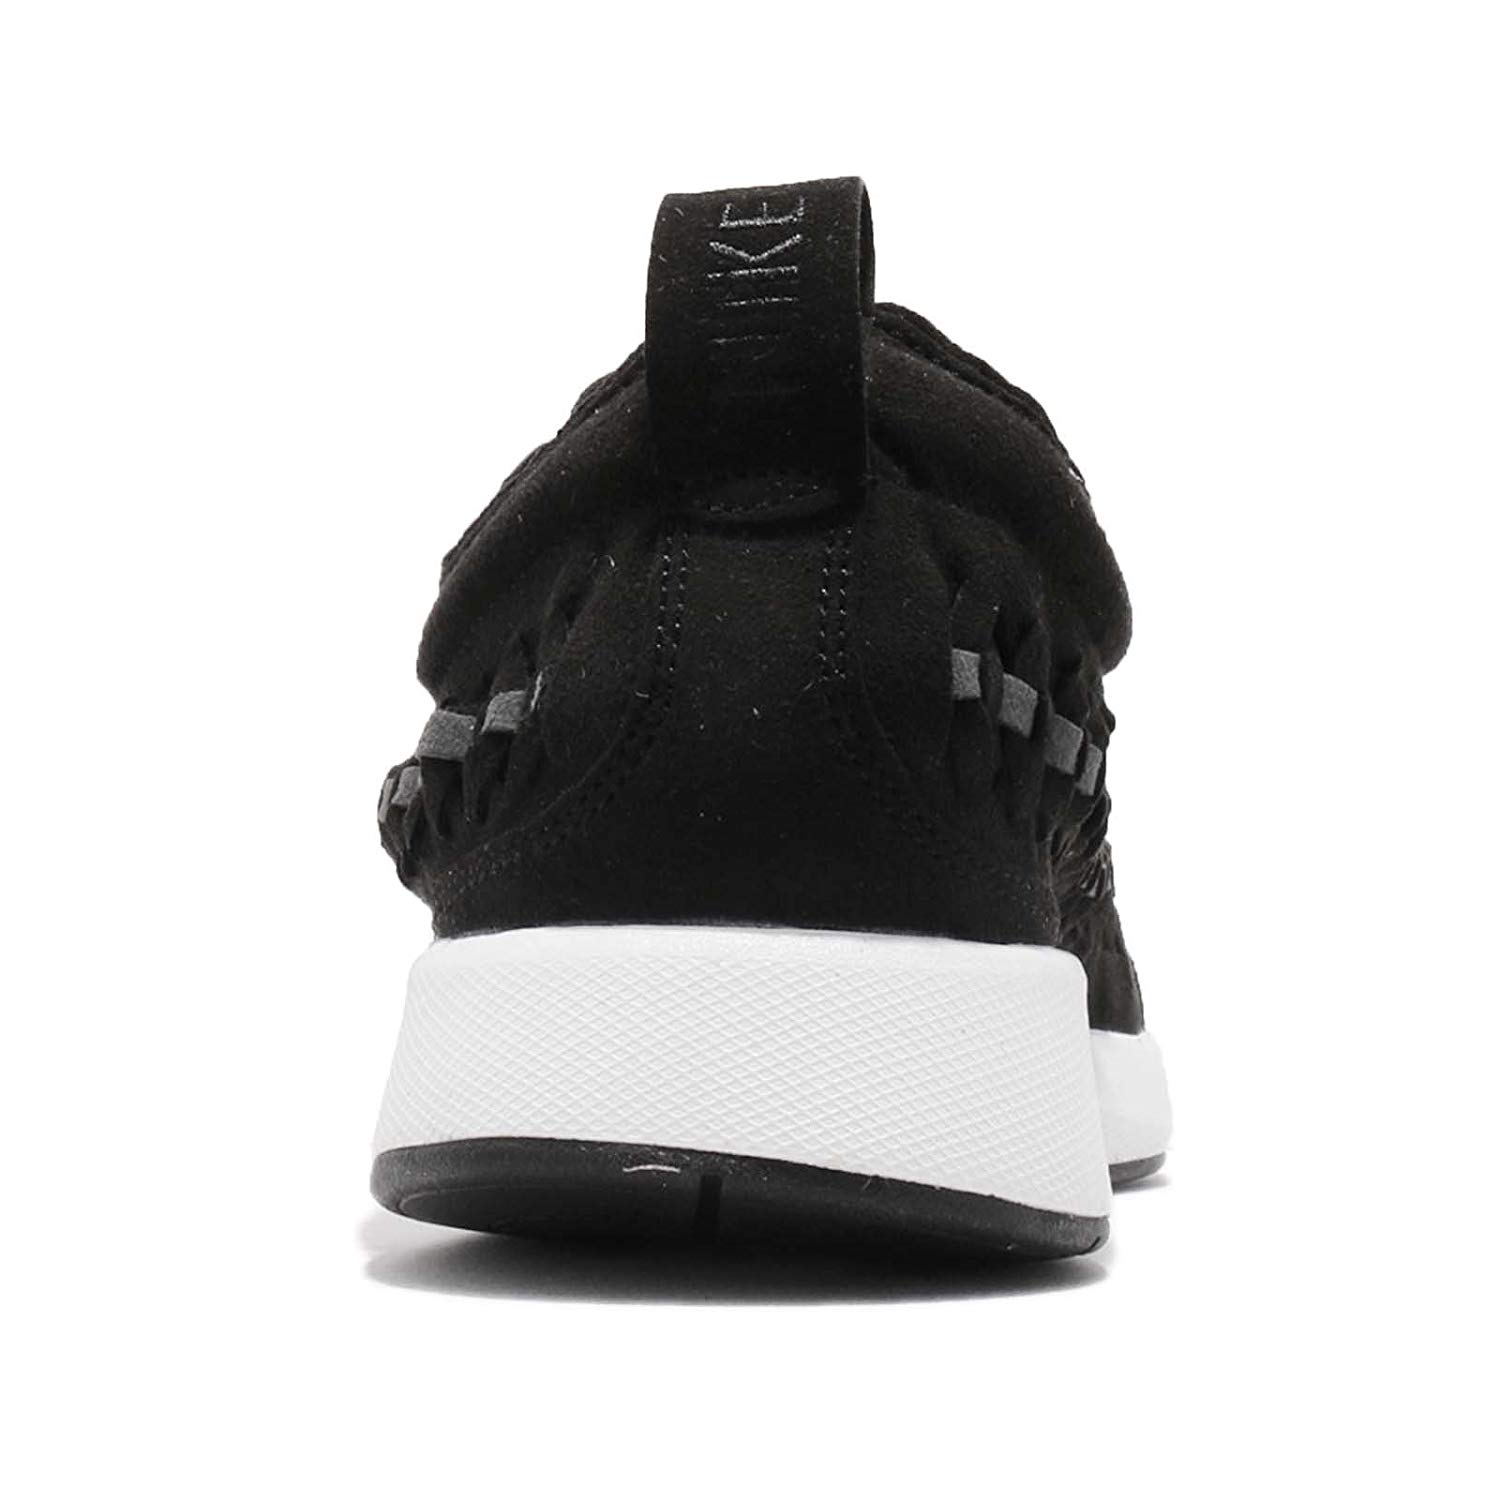 Nike Men's Dualtone Racer Woven Running Shoes (9.5, Black/Dark Grey-white) - image 2 of 6